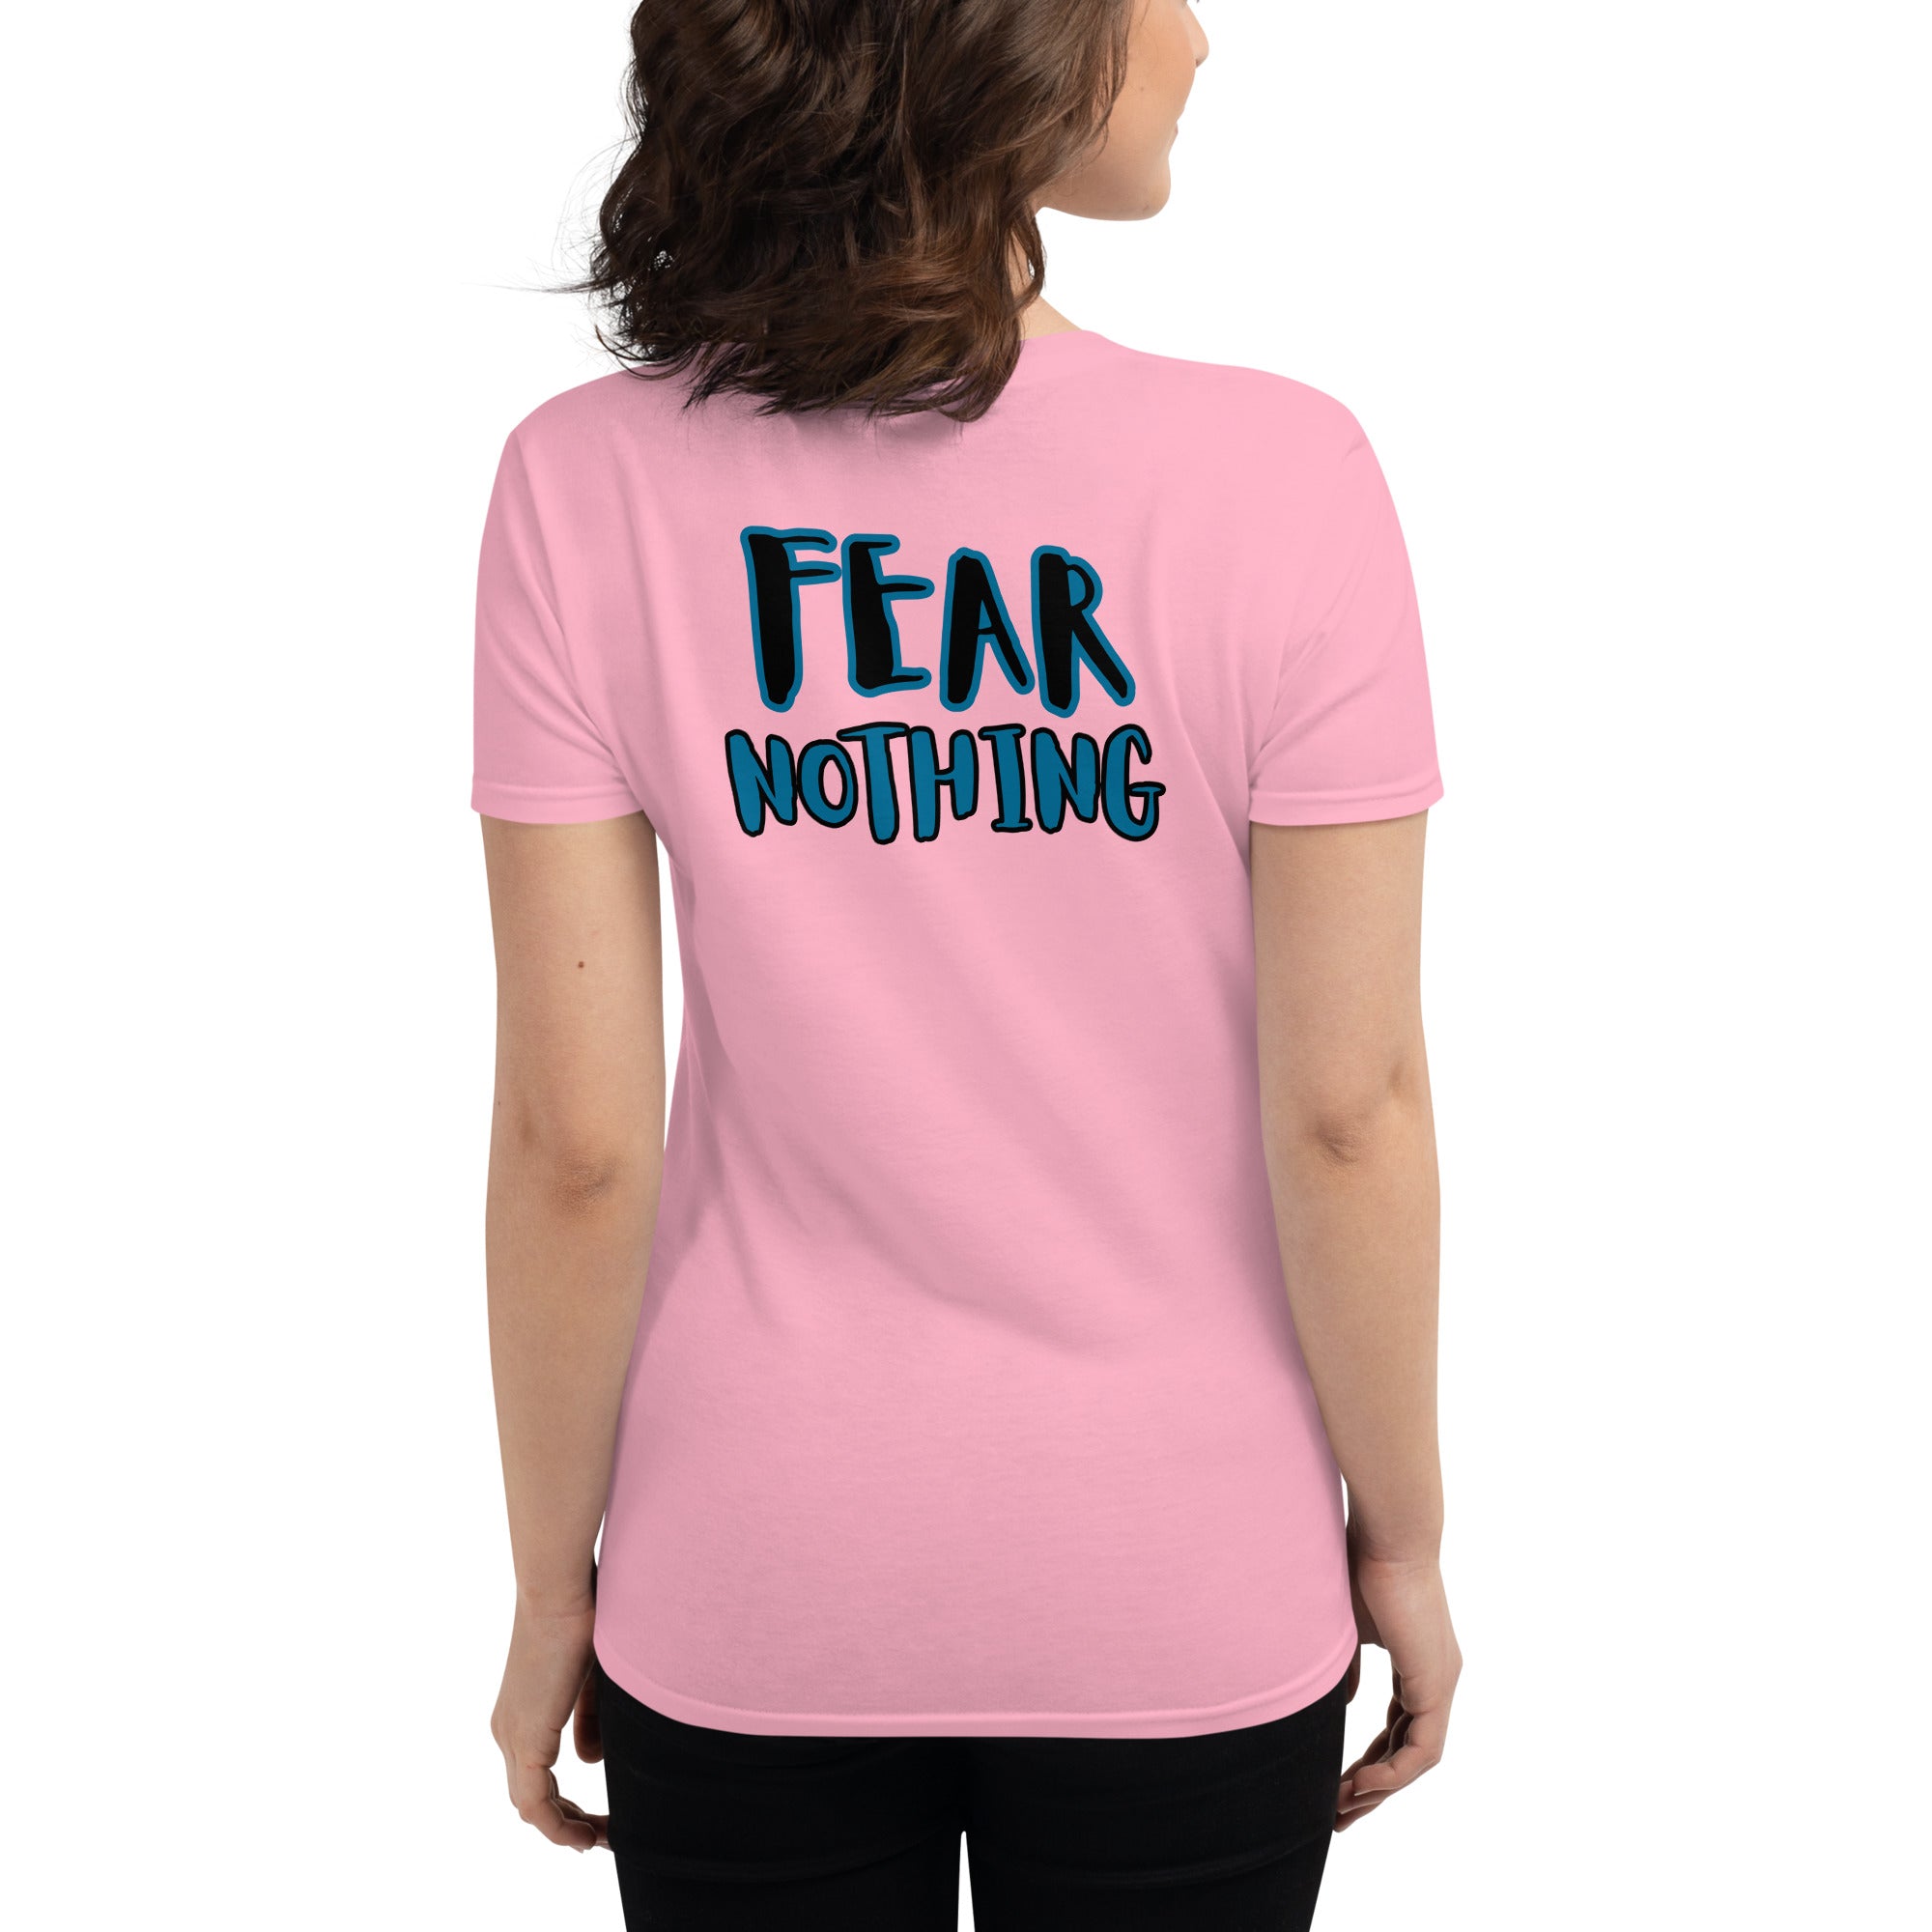 Fear Nothing-Women's short sleeve t-shirt